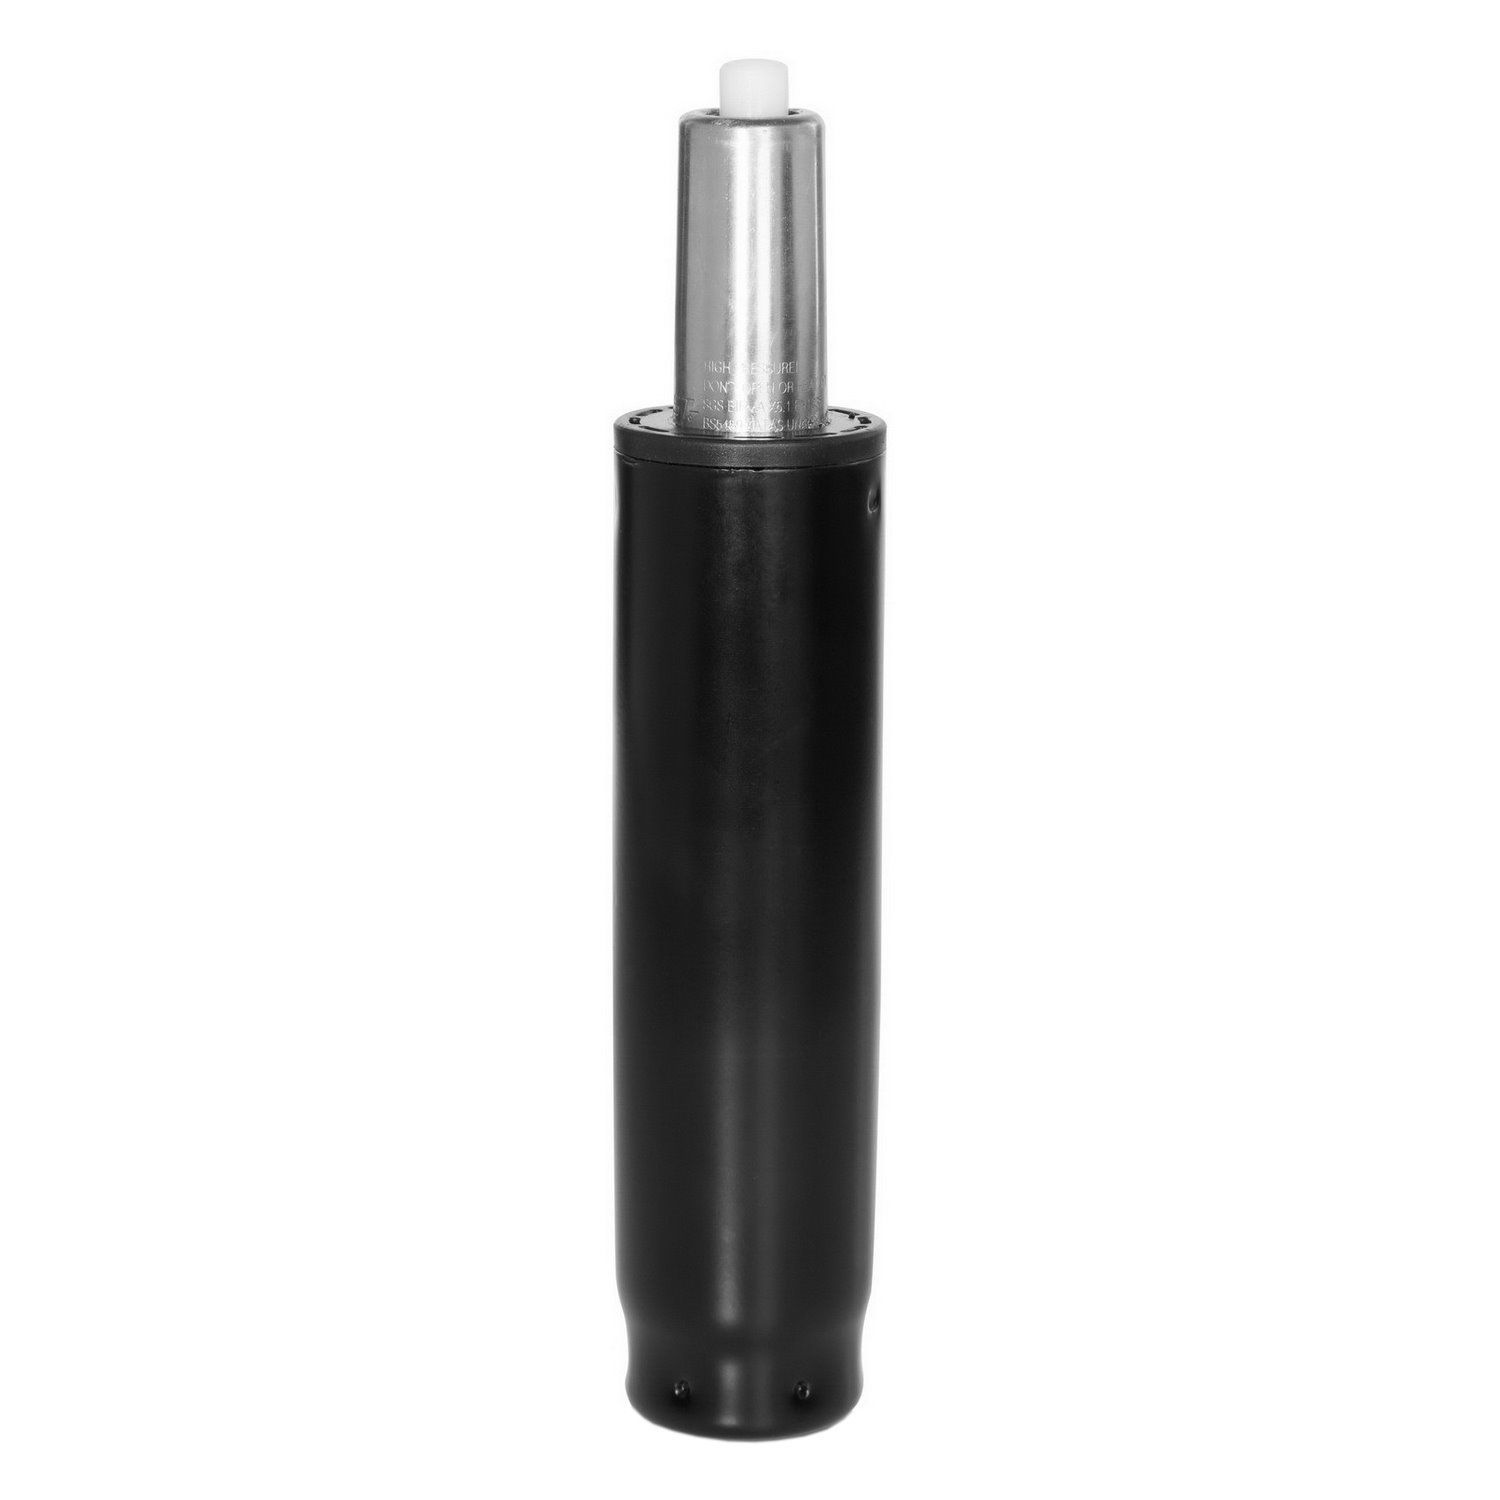 Gasfeder / Gasdruckfeder L, 29-40 cm hjh OFFICE